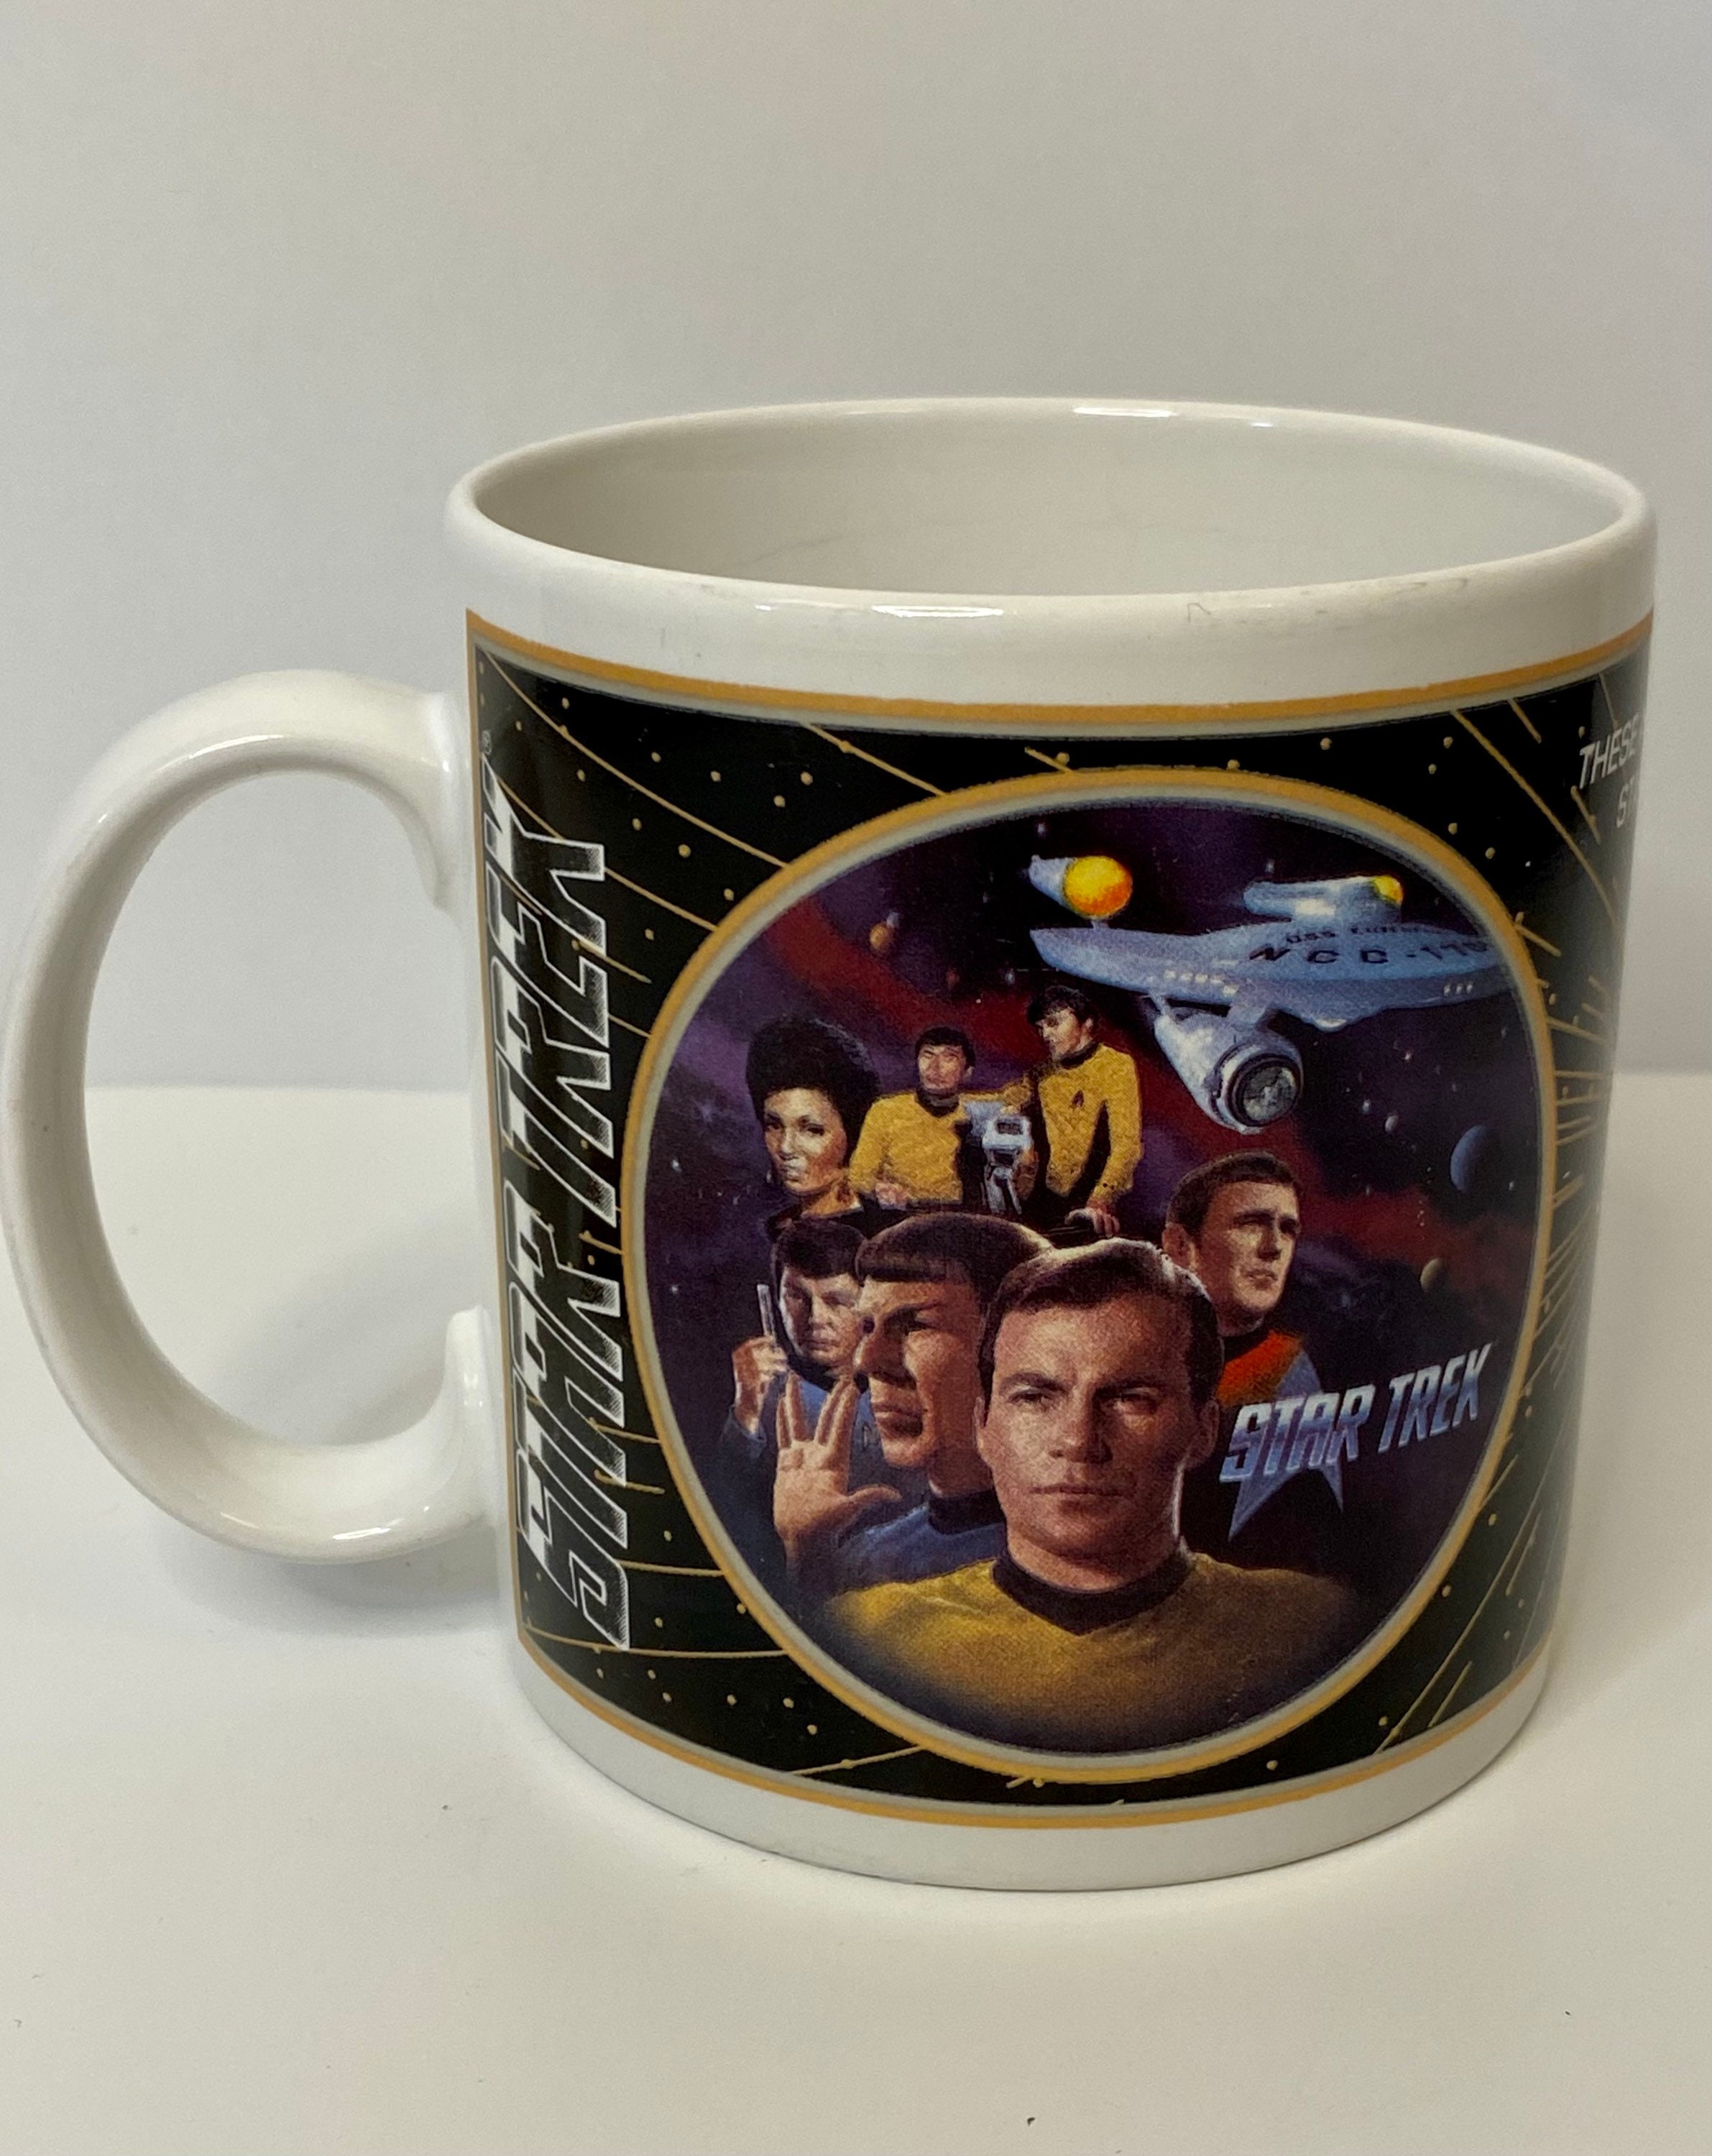 Vintage Star Trek Collectors Mug. 